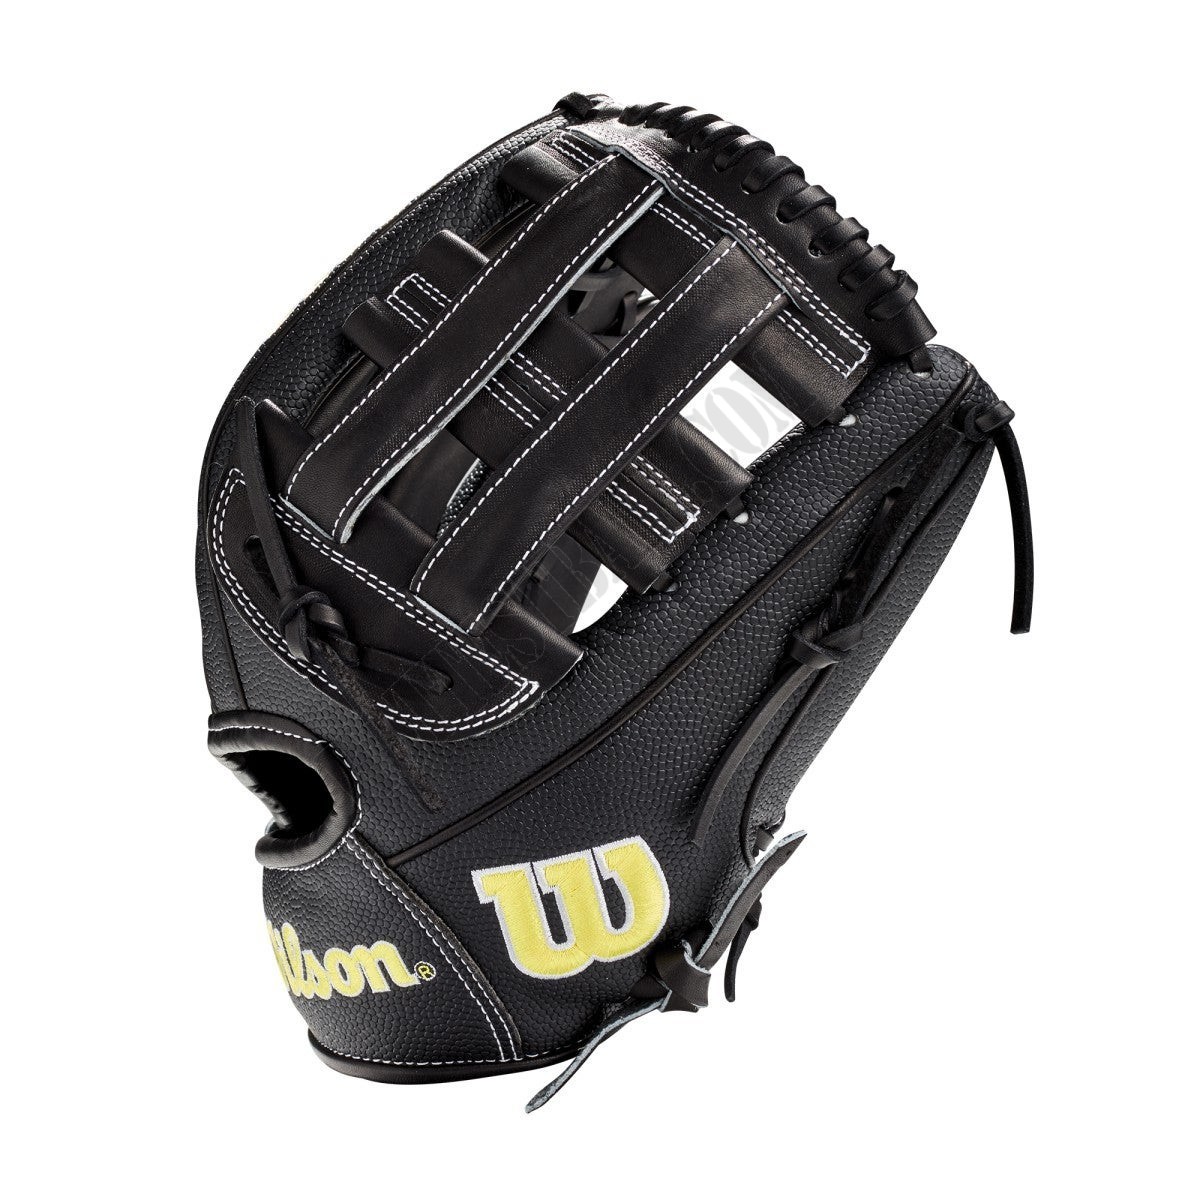 2021 A2000 DW5SS 12" Infield Baseball Glove ● Wilson Promotions - -3